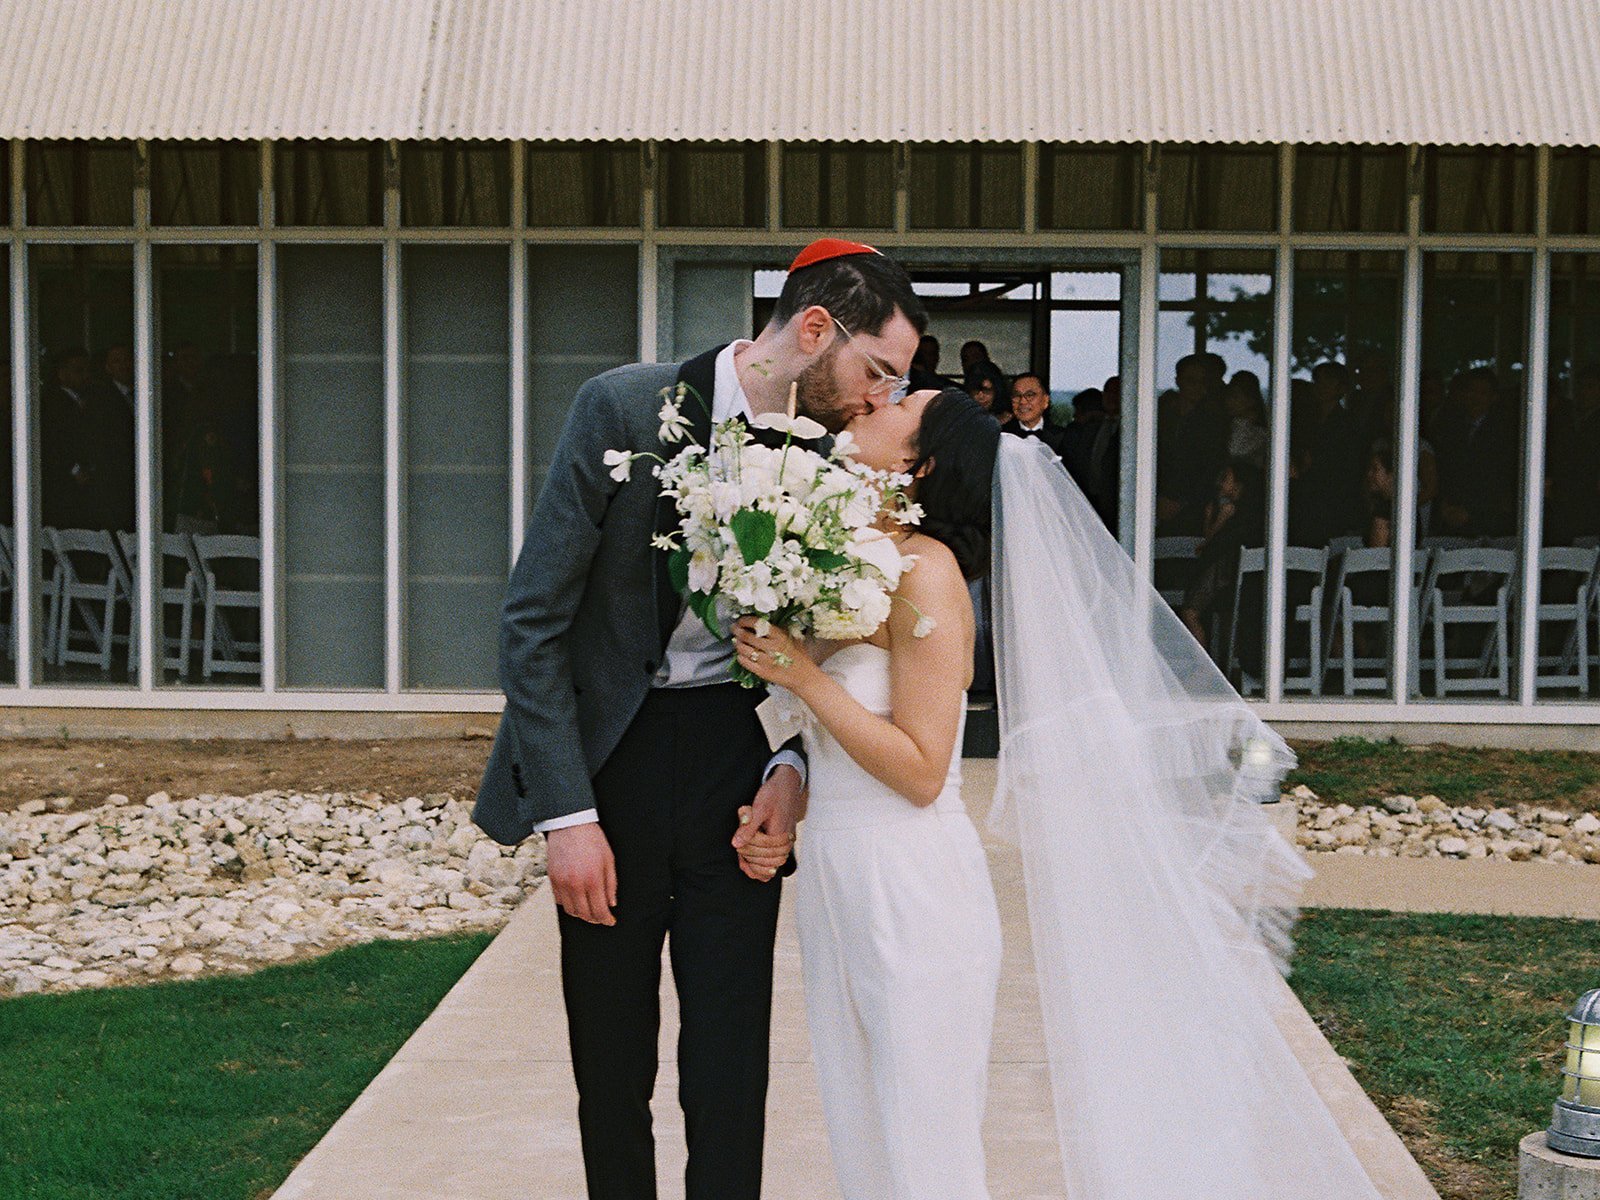 Best-Austin-Candid-Wedding-Photographers-Film-Documentary-35mm-Prospect-House-77.jpg